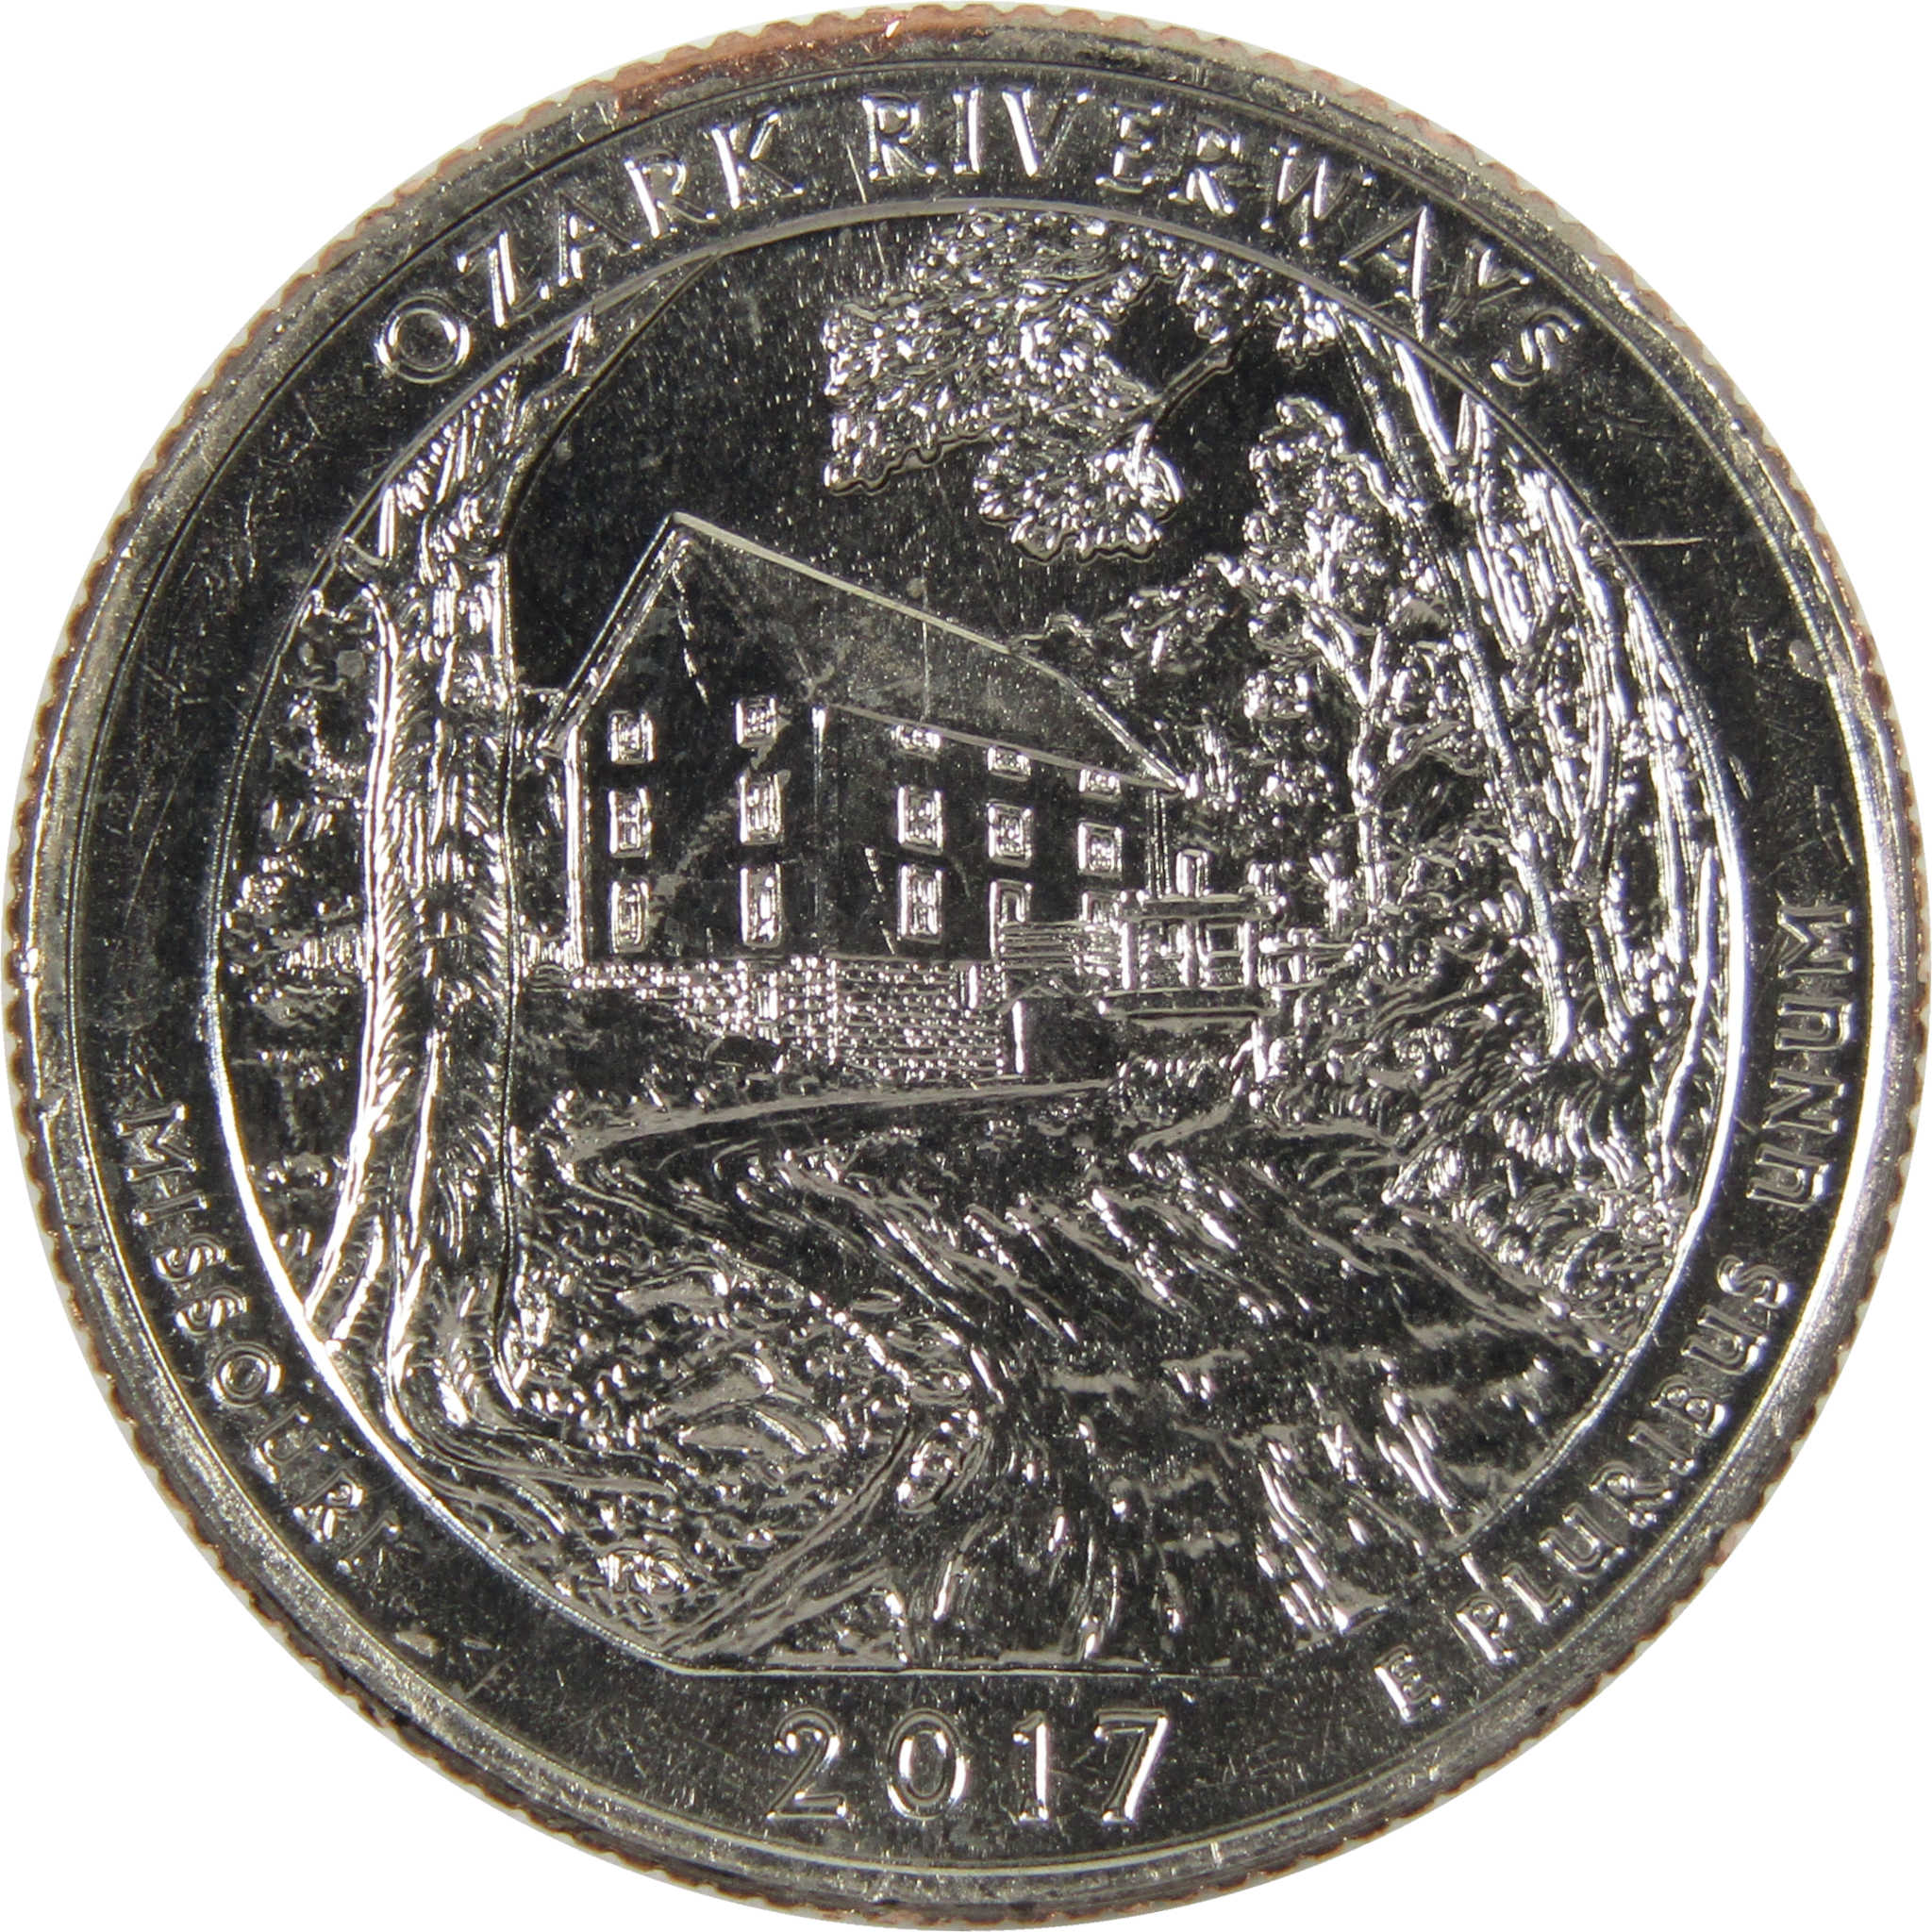 2017 D Ozark NSR National Park Quarter BU Uncirculated Clad ATB Coin